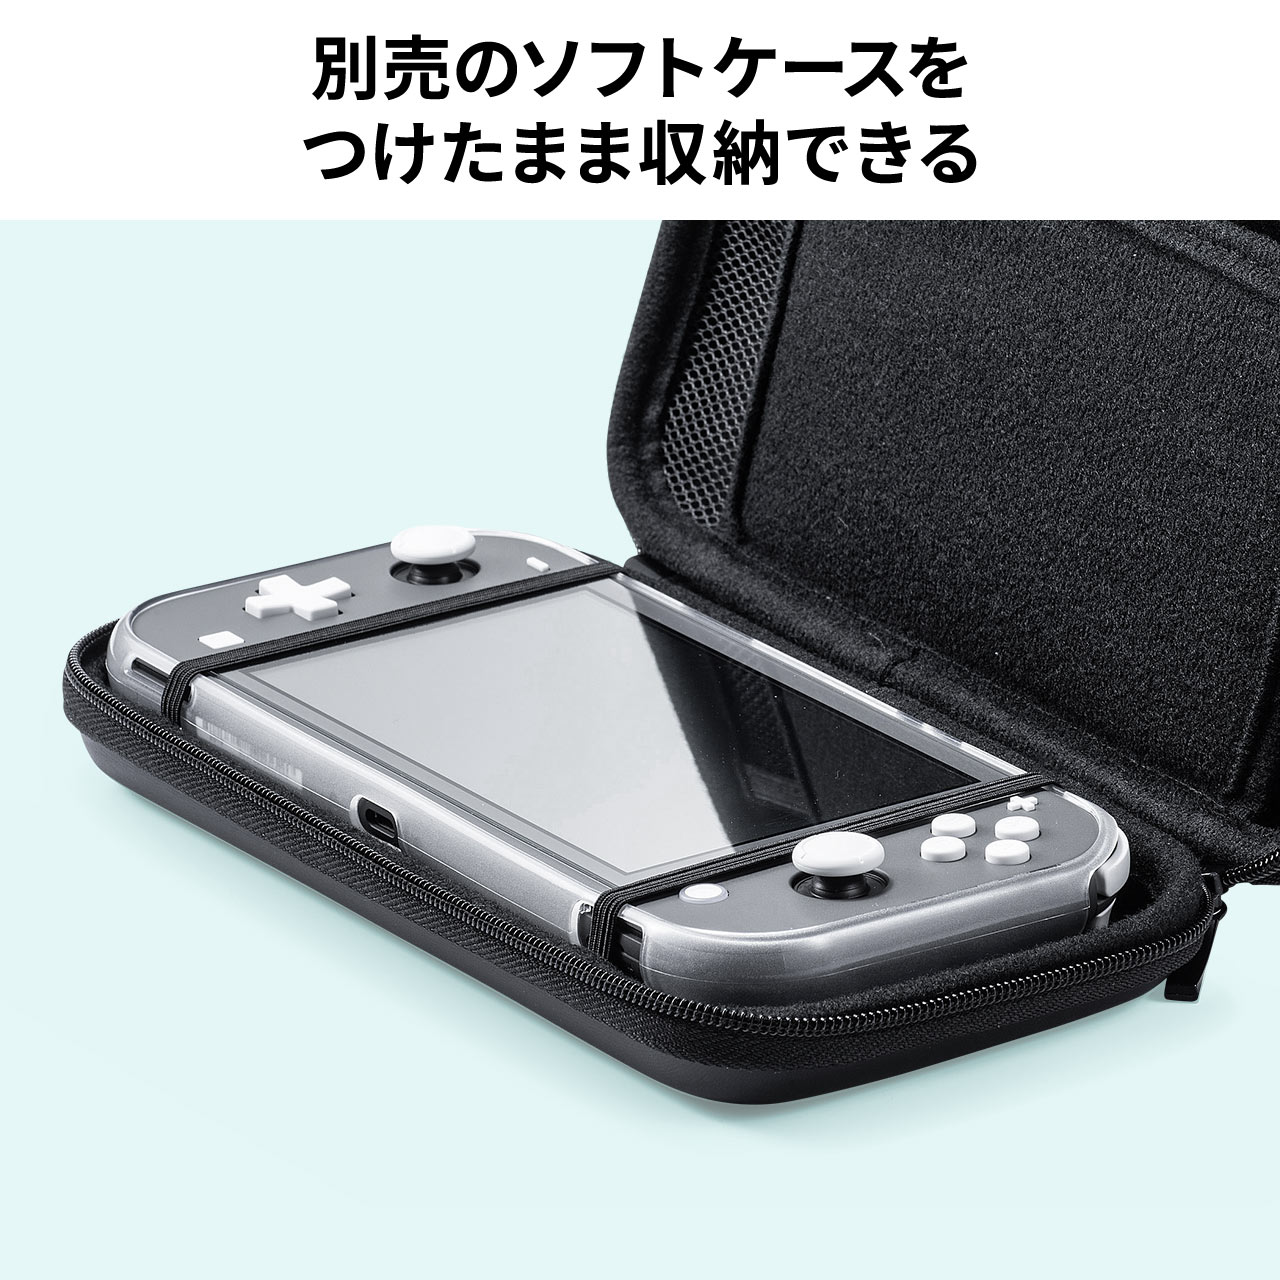 Nintendo　Switch　有機EL ホワイト　+別売りSwitchケース